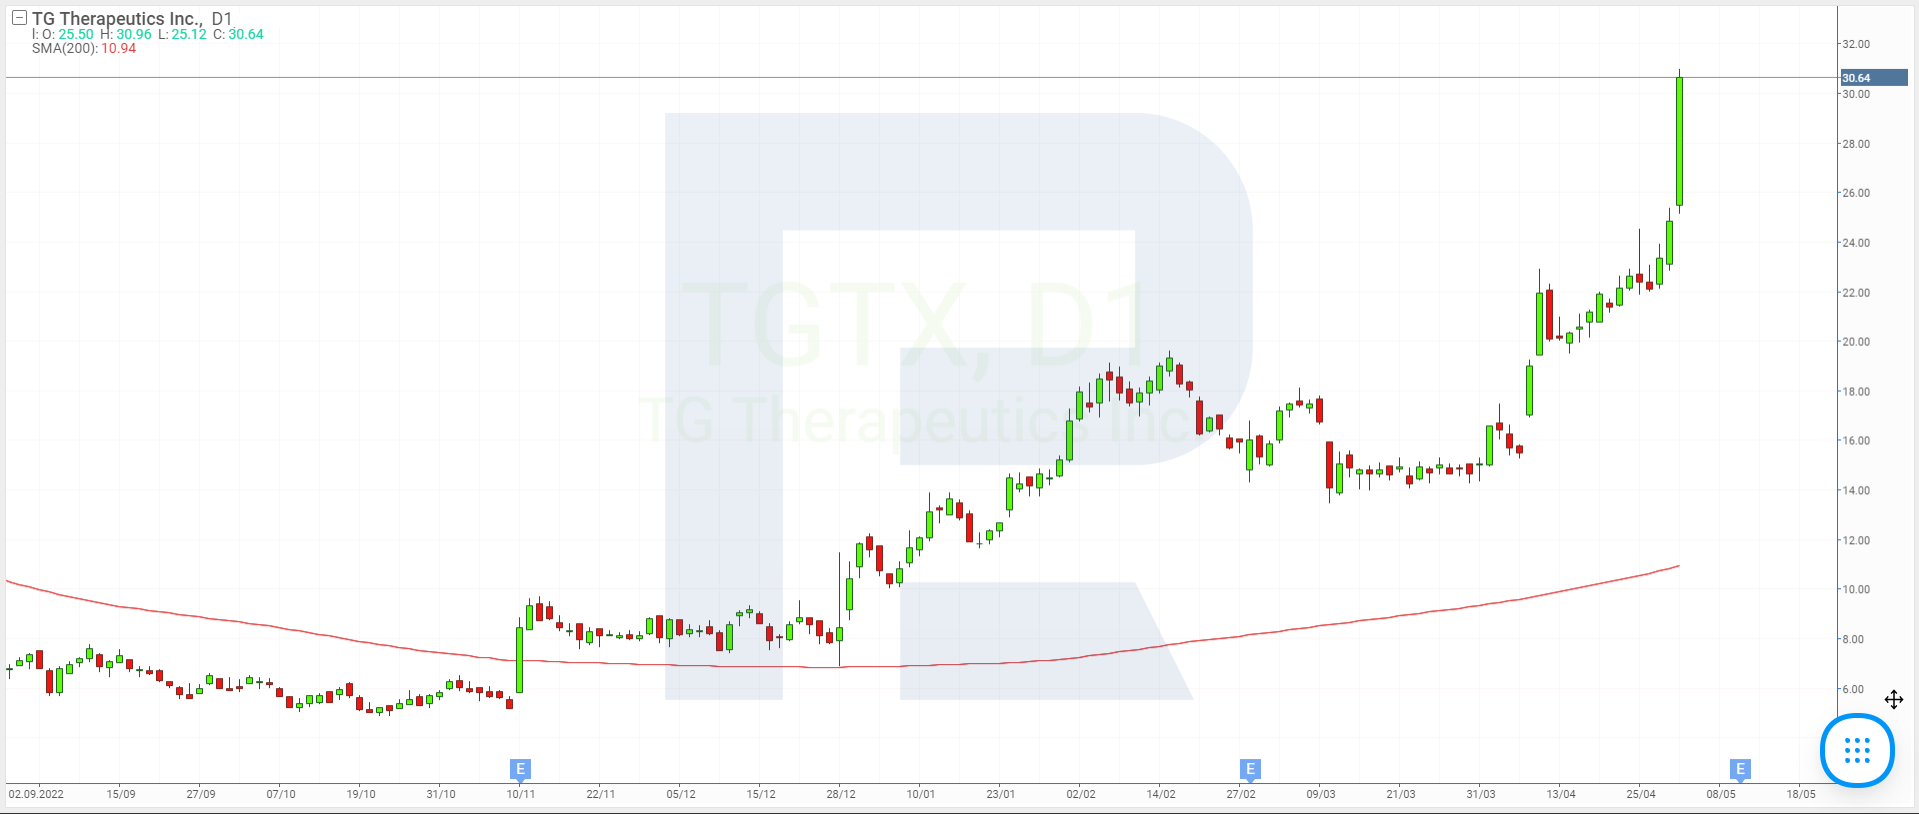 Stock price charts of TG Therapeutics Inc.